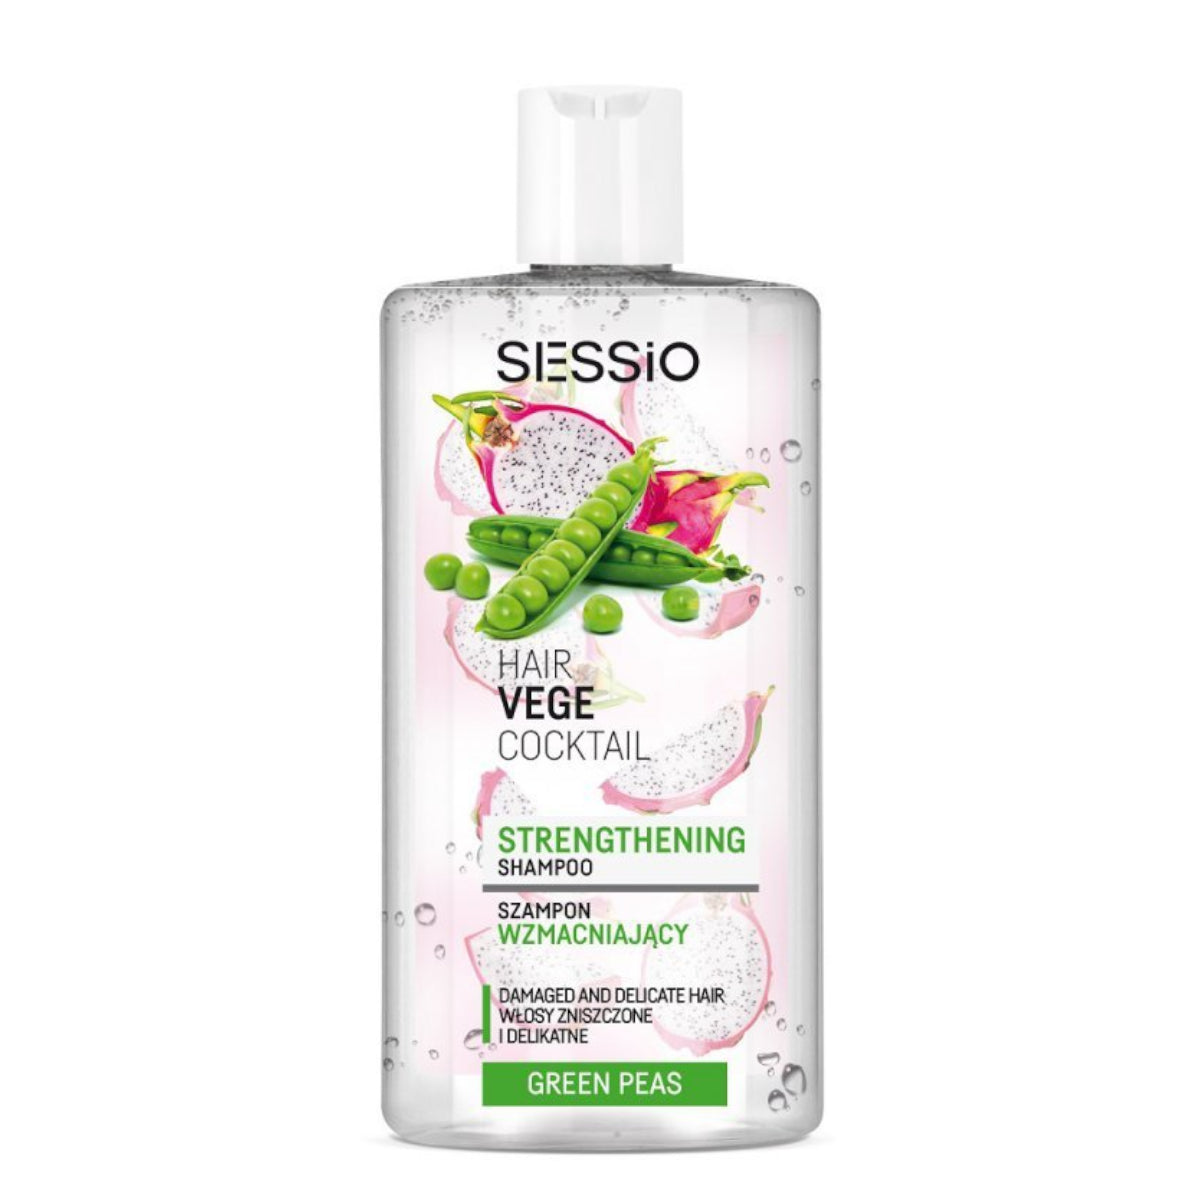 Sessio Hair Vege Cocktail Strengthening Shampoo Green Peas